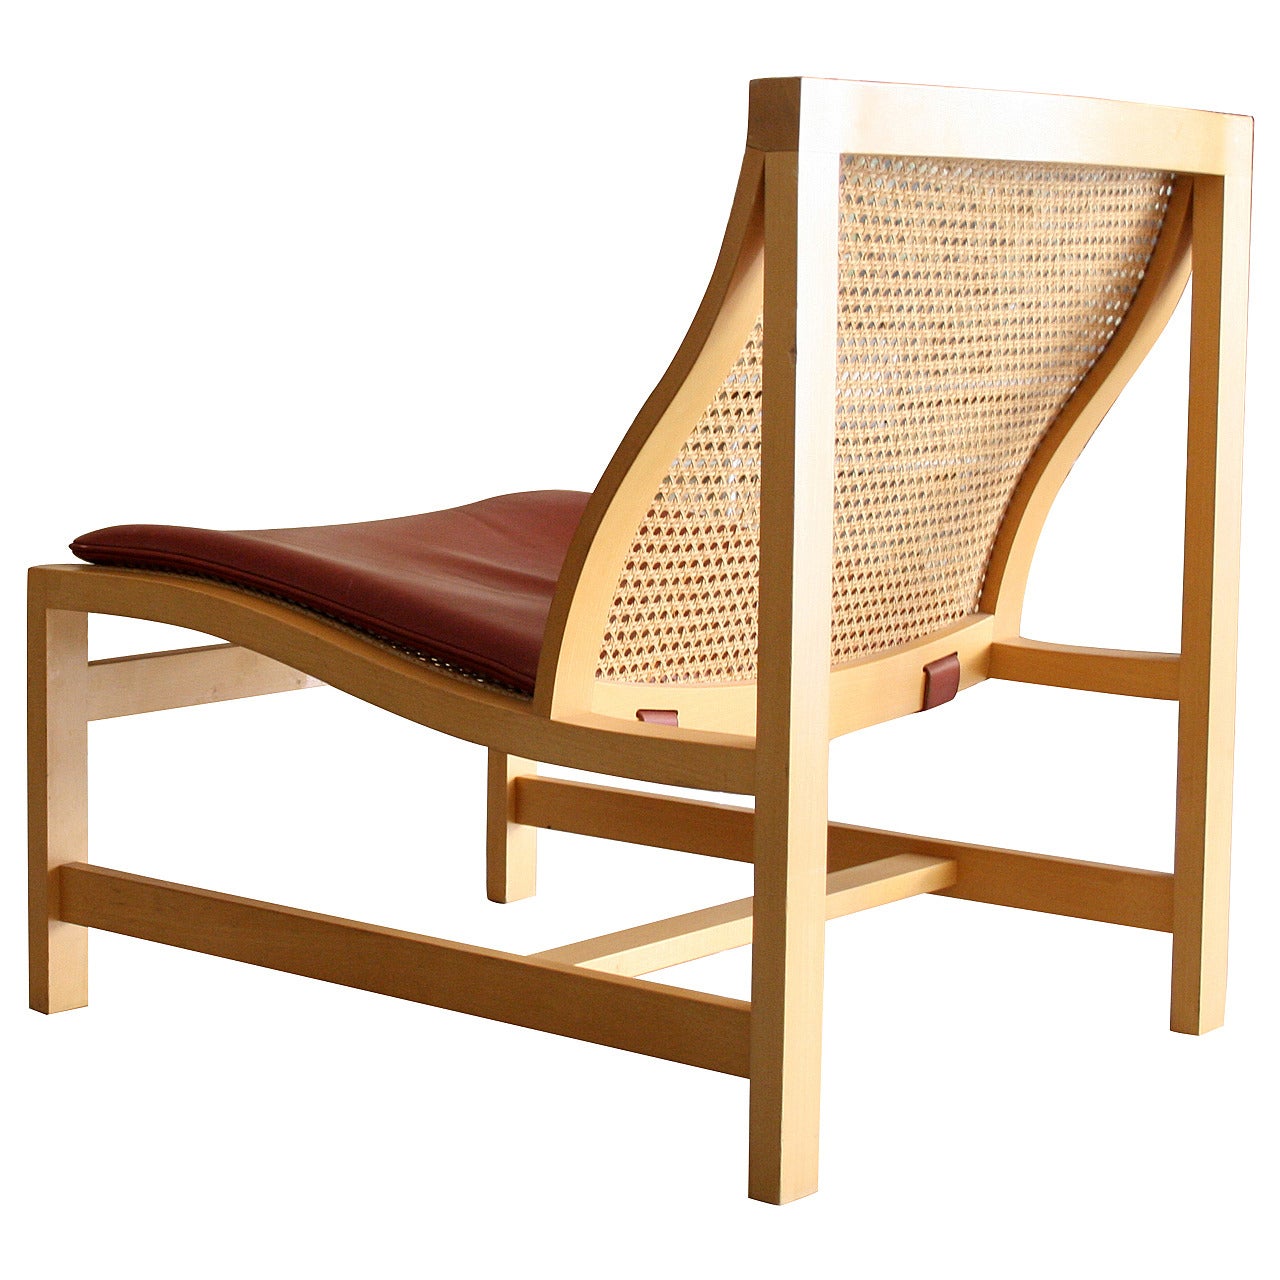 'King' Lounge Chair by R. Thygesen & J. Sorensen